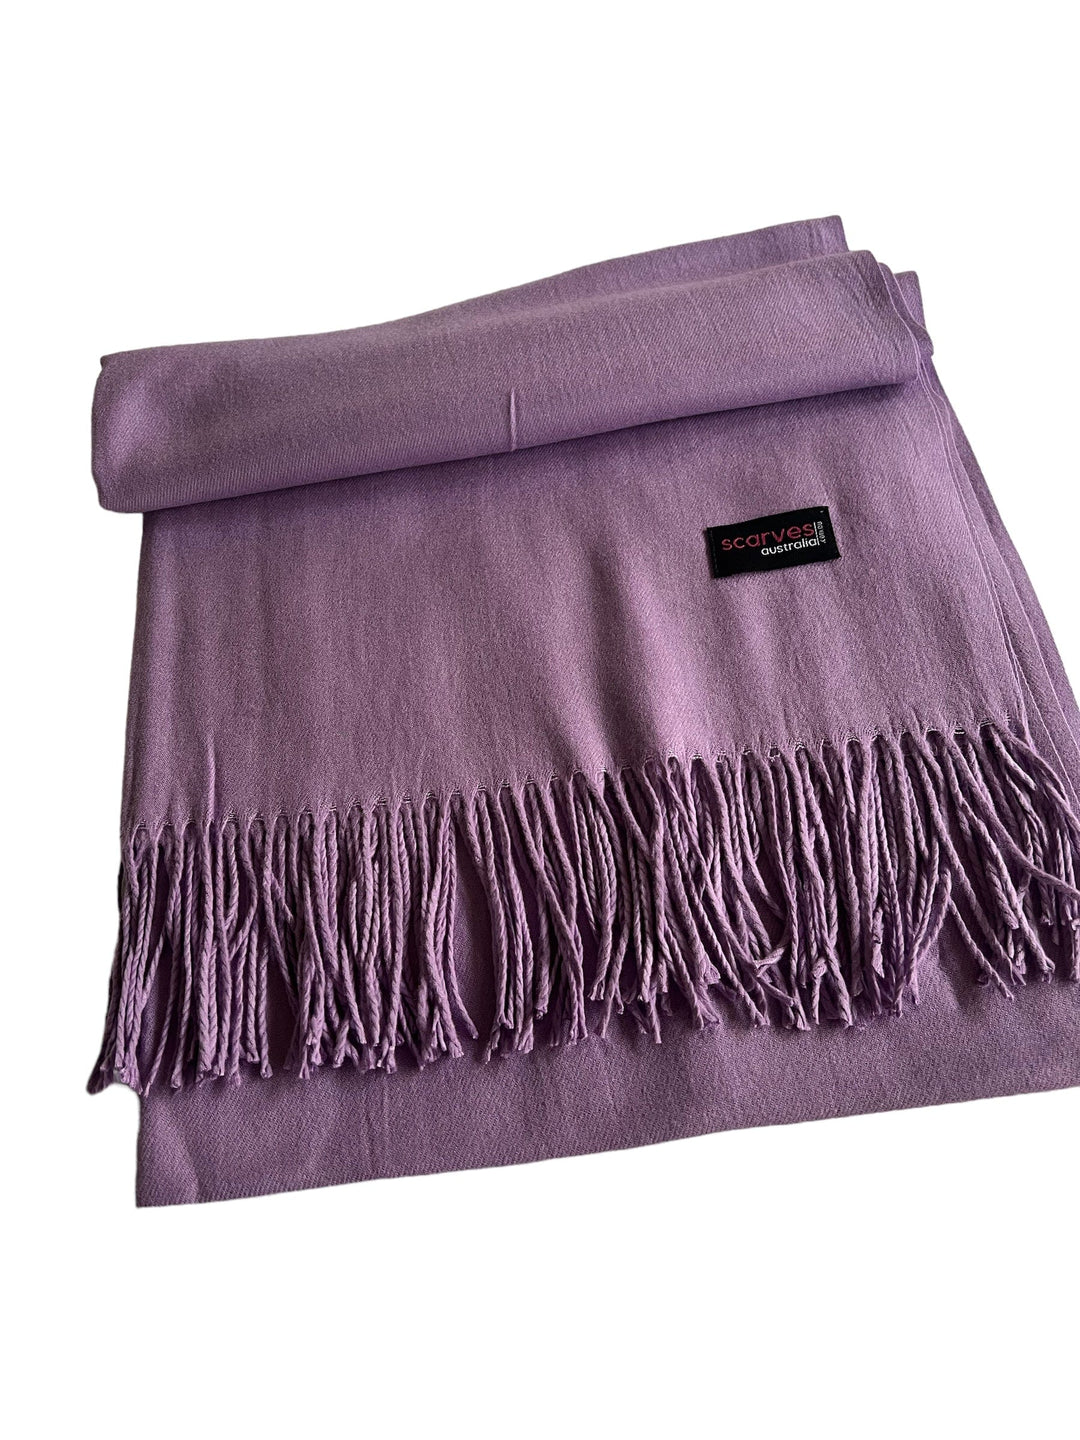 Scarves Australia Pashmina Pashmina Shawl - Lilac Purple Luxury Scarf